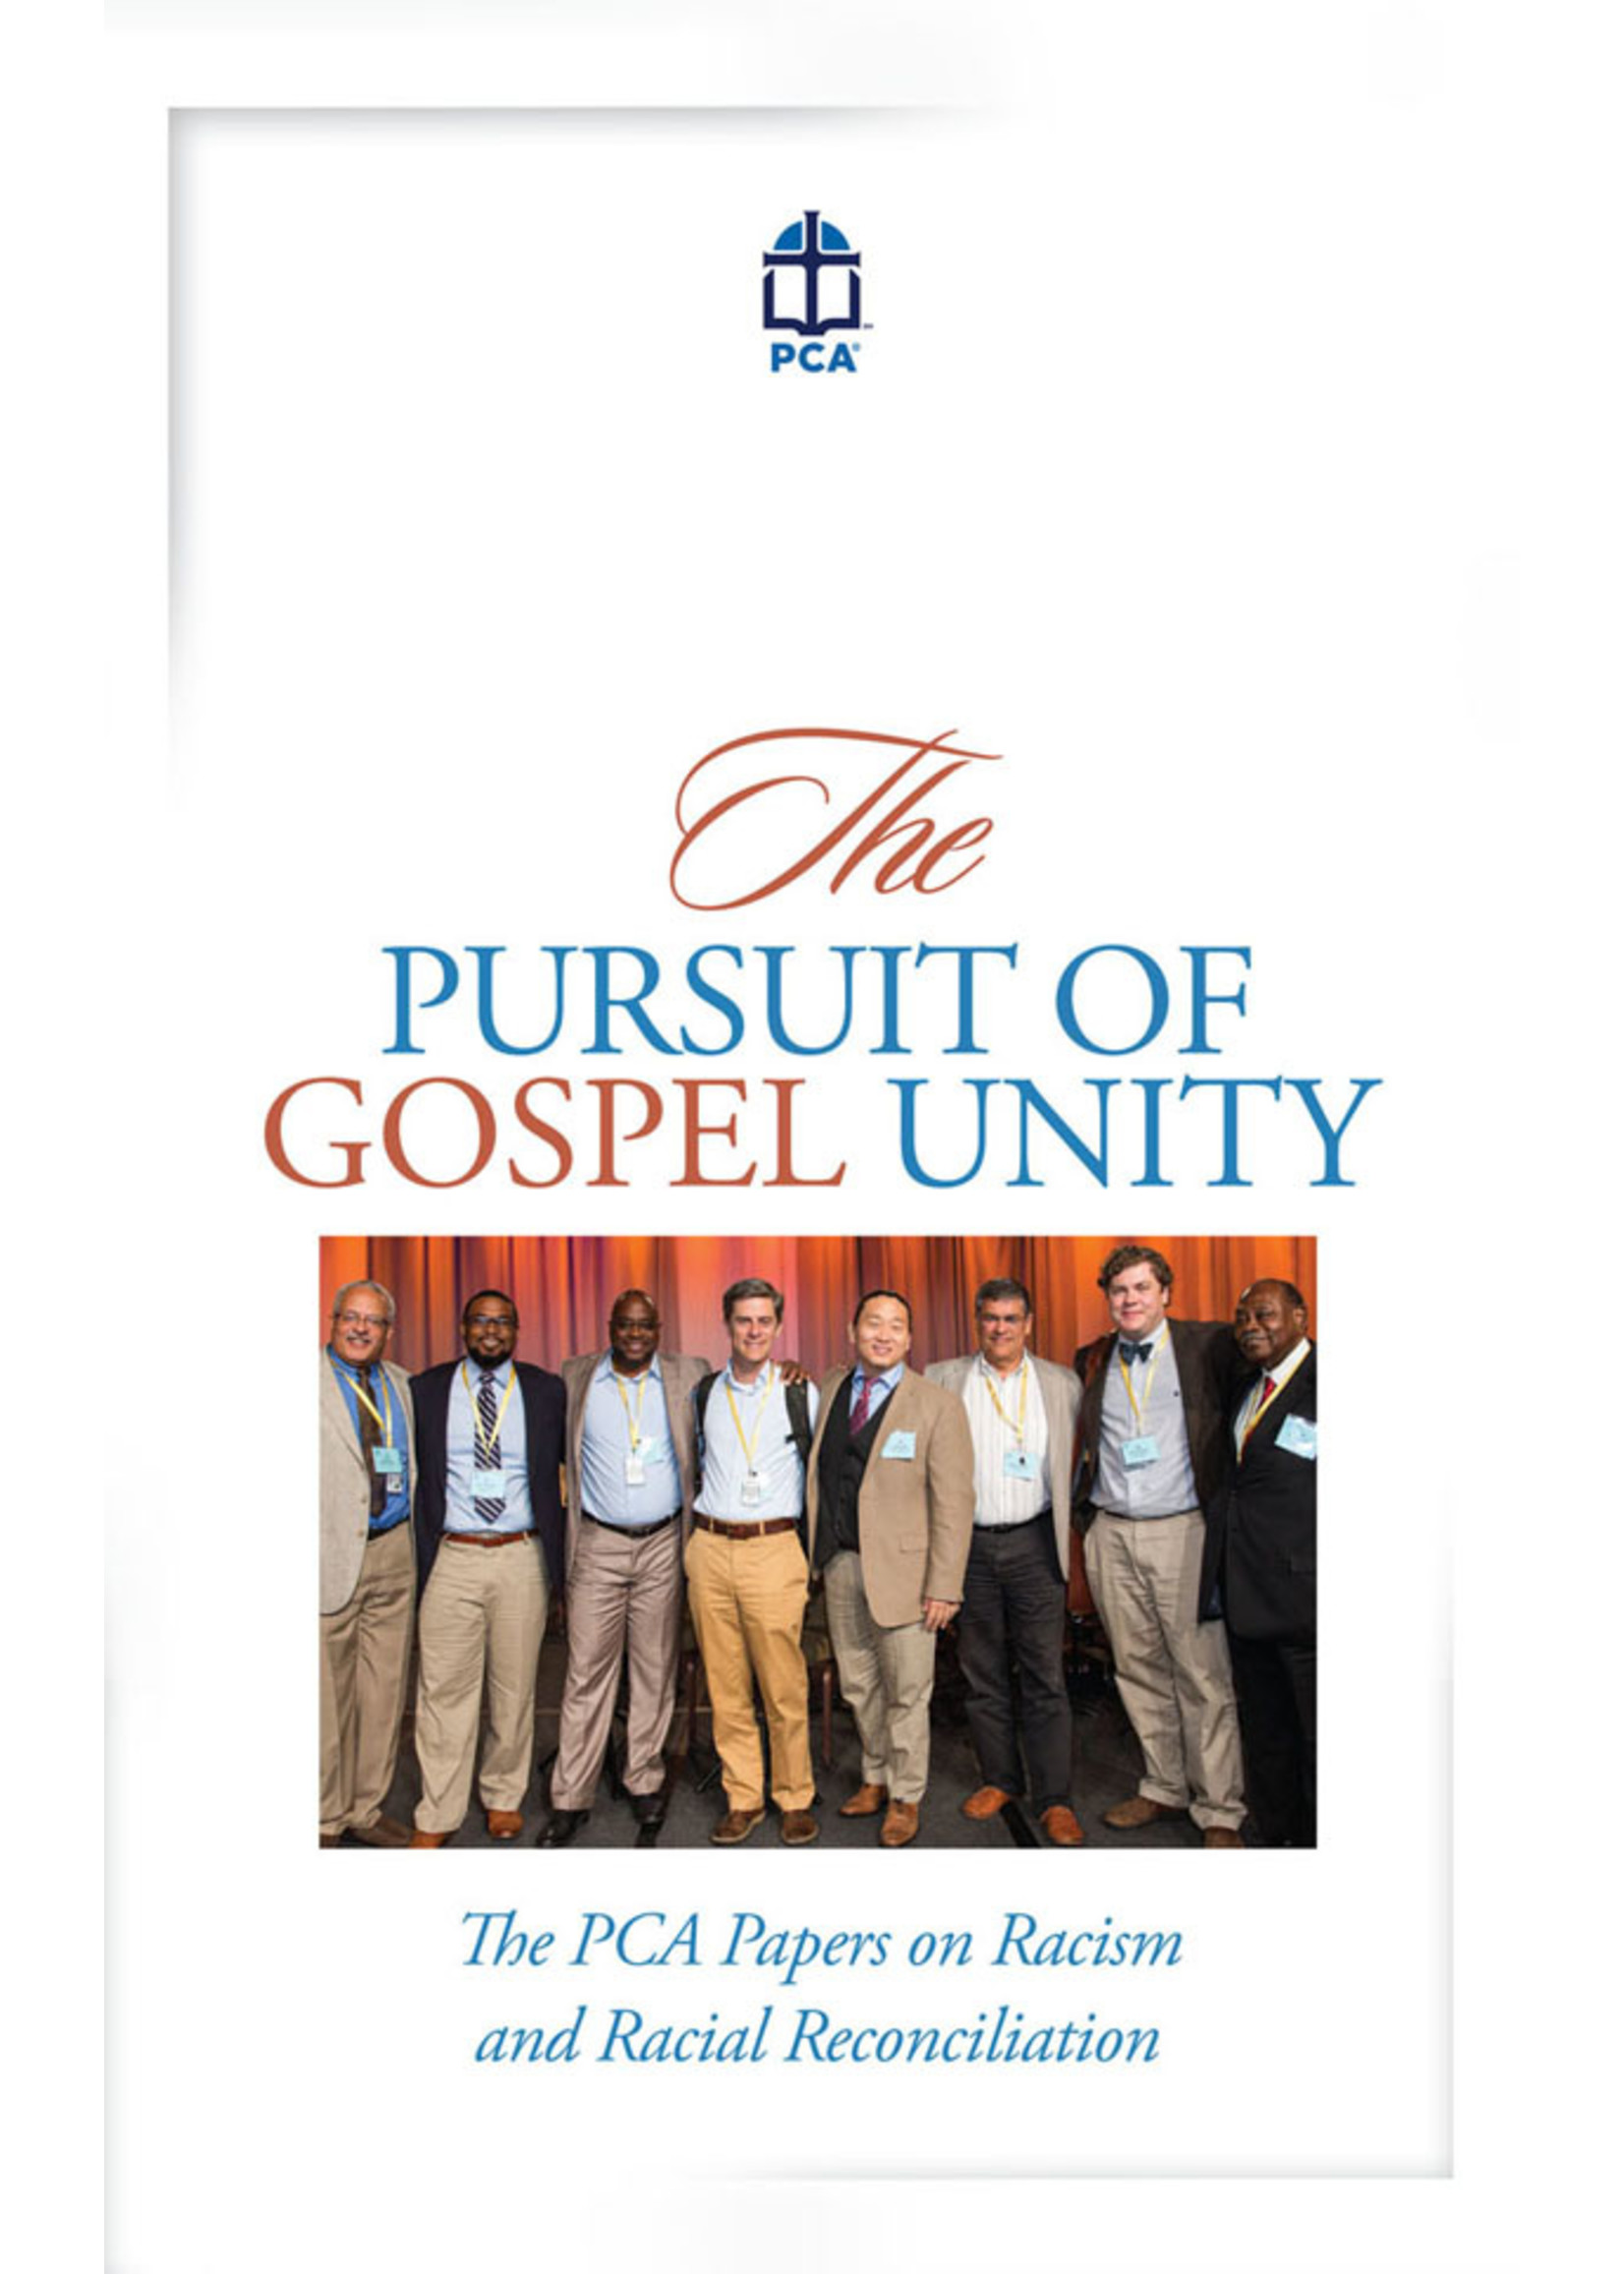 PCA Pursuit of Gospel Unity